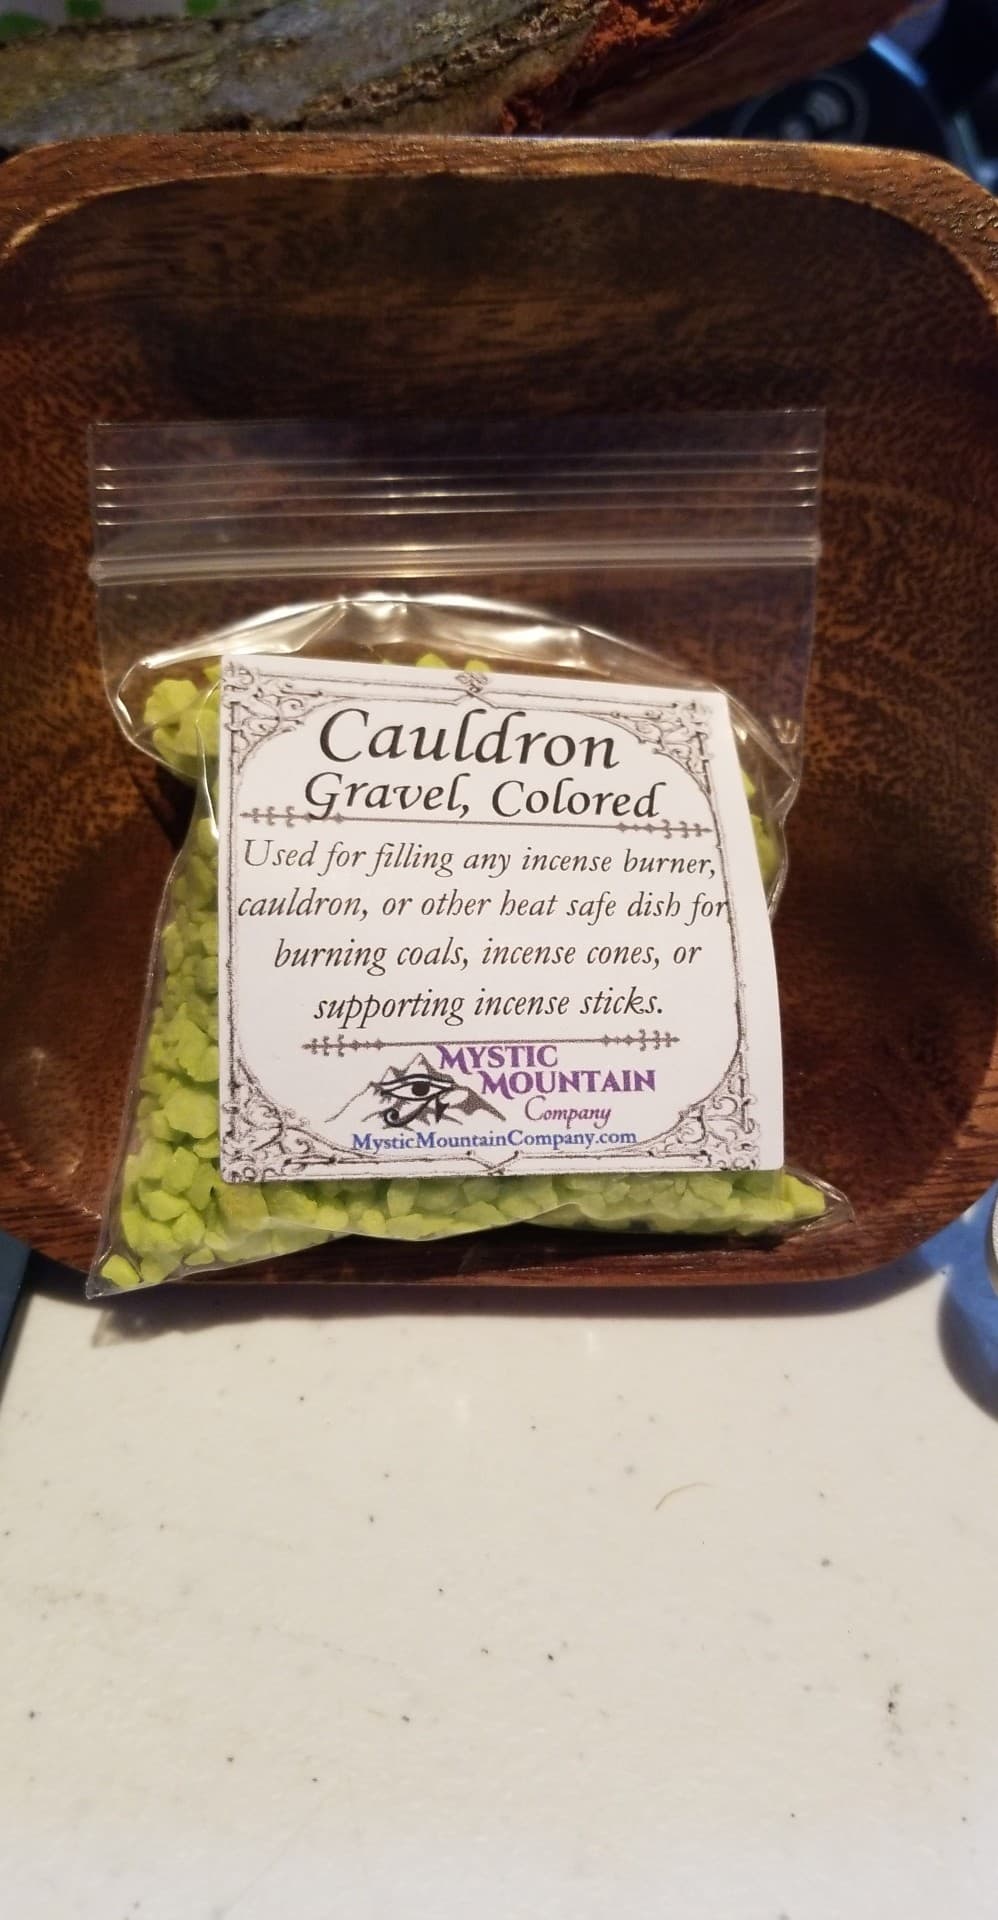 Cauldron Gravel, Colored